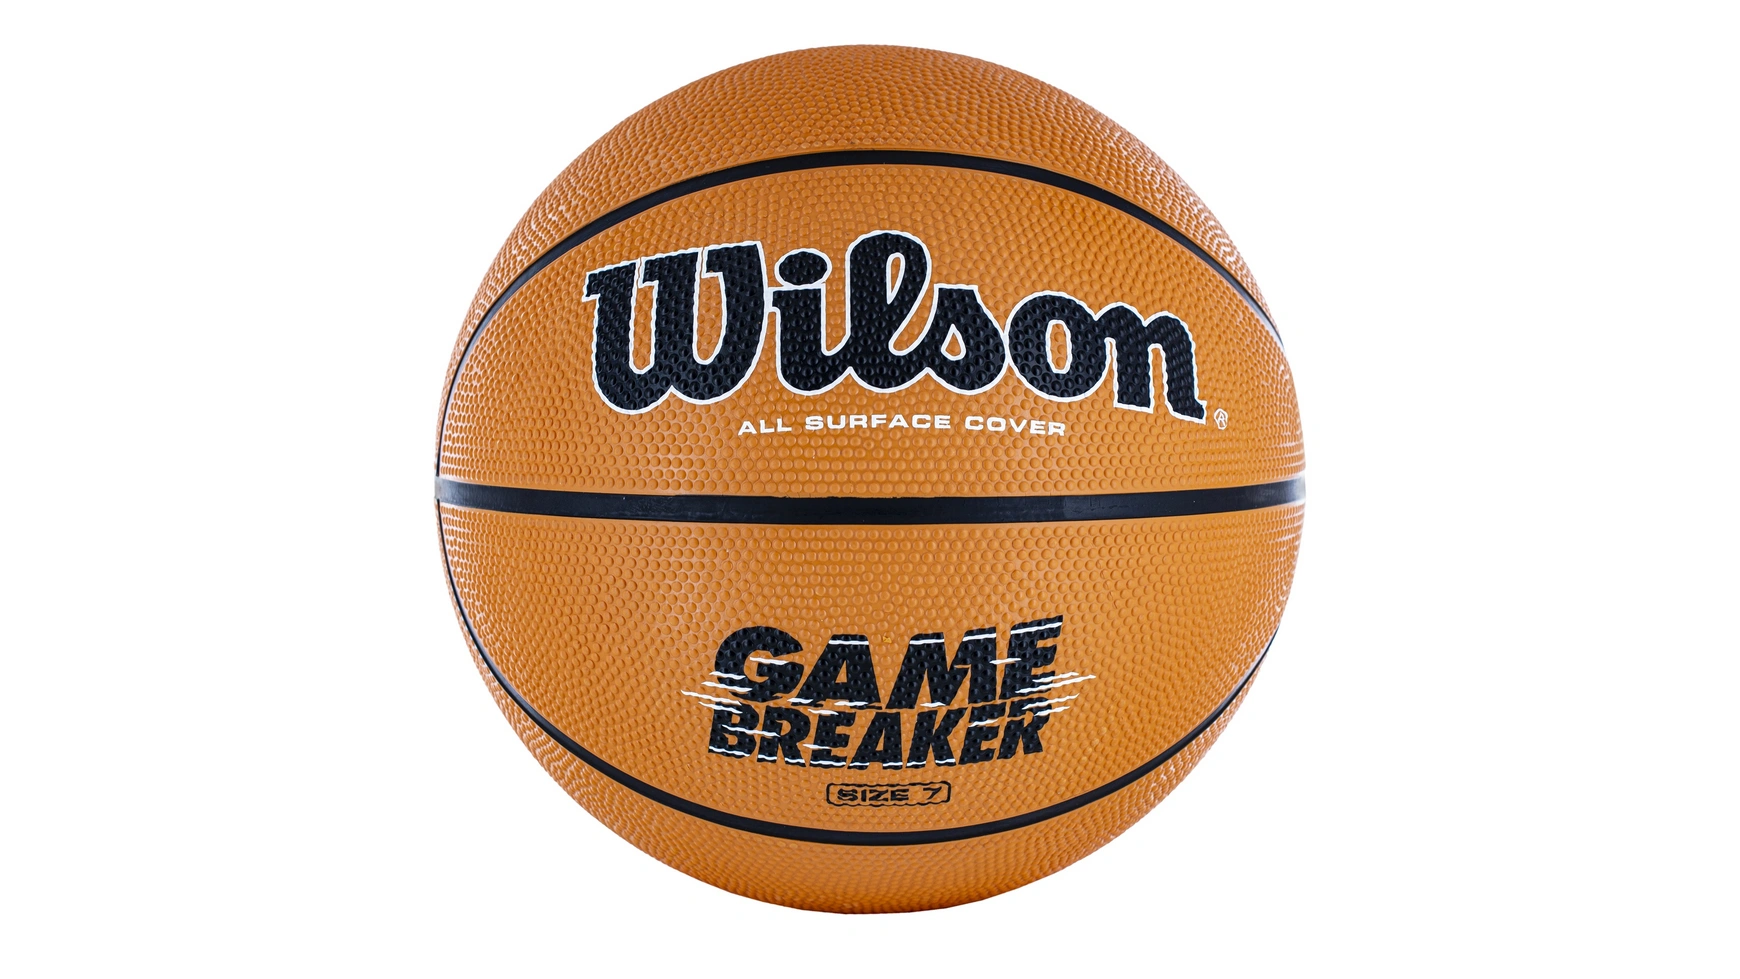 Wilson Basketball Gamebreaker, размер 7 punch mini mini free 36 portable net new basketball indoor frame plastic game folding suspension hoop basketball set basketball